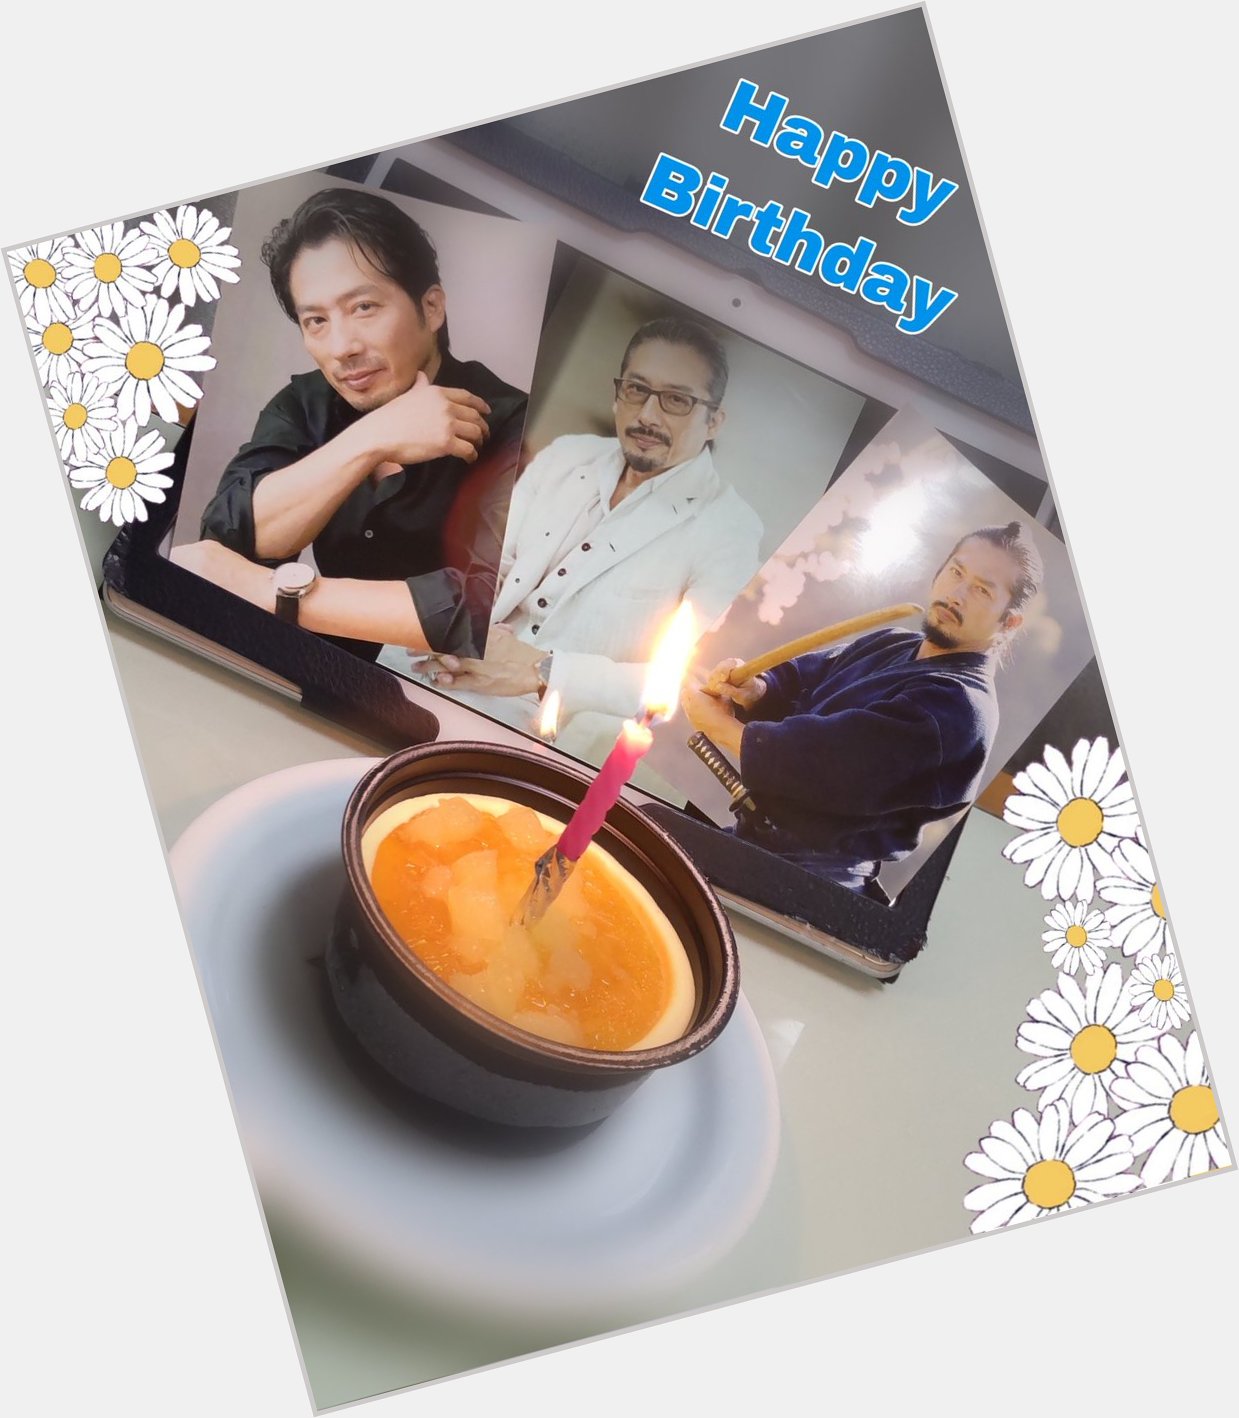                Happy Birthday Dear Hiroyuki sanada
62                   